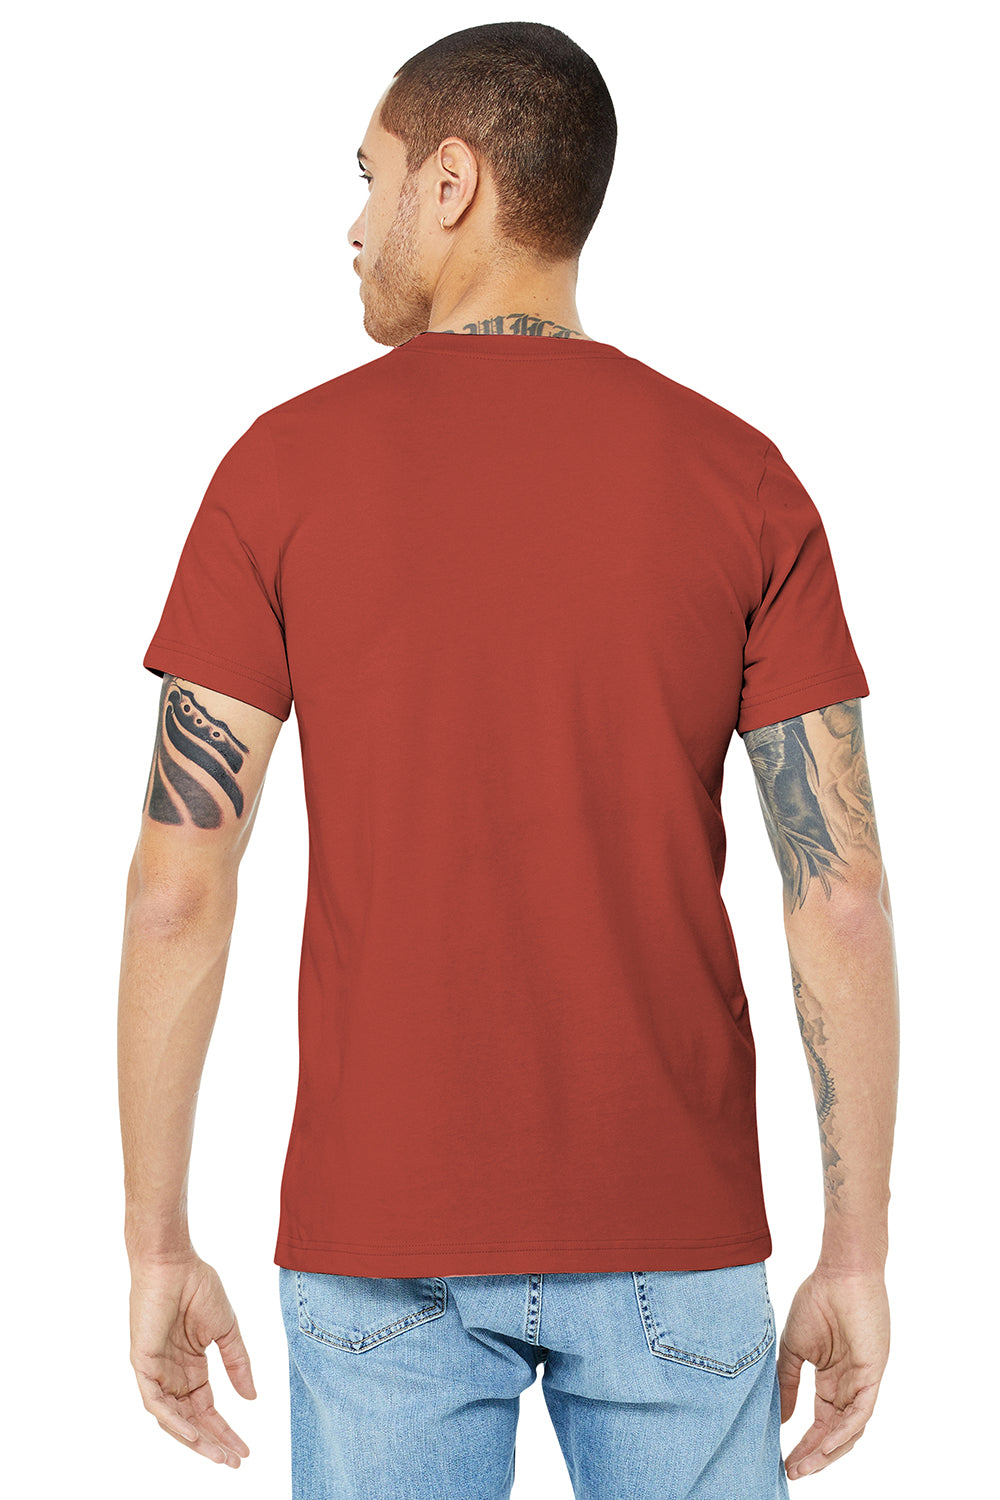 Bella + Canvas BC3001/3001C Mens Jersey Short Sleeve Crewneck T-Shirt Rust Red Model Back